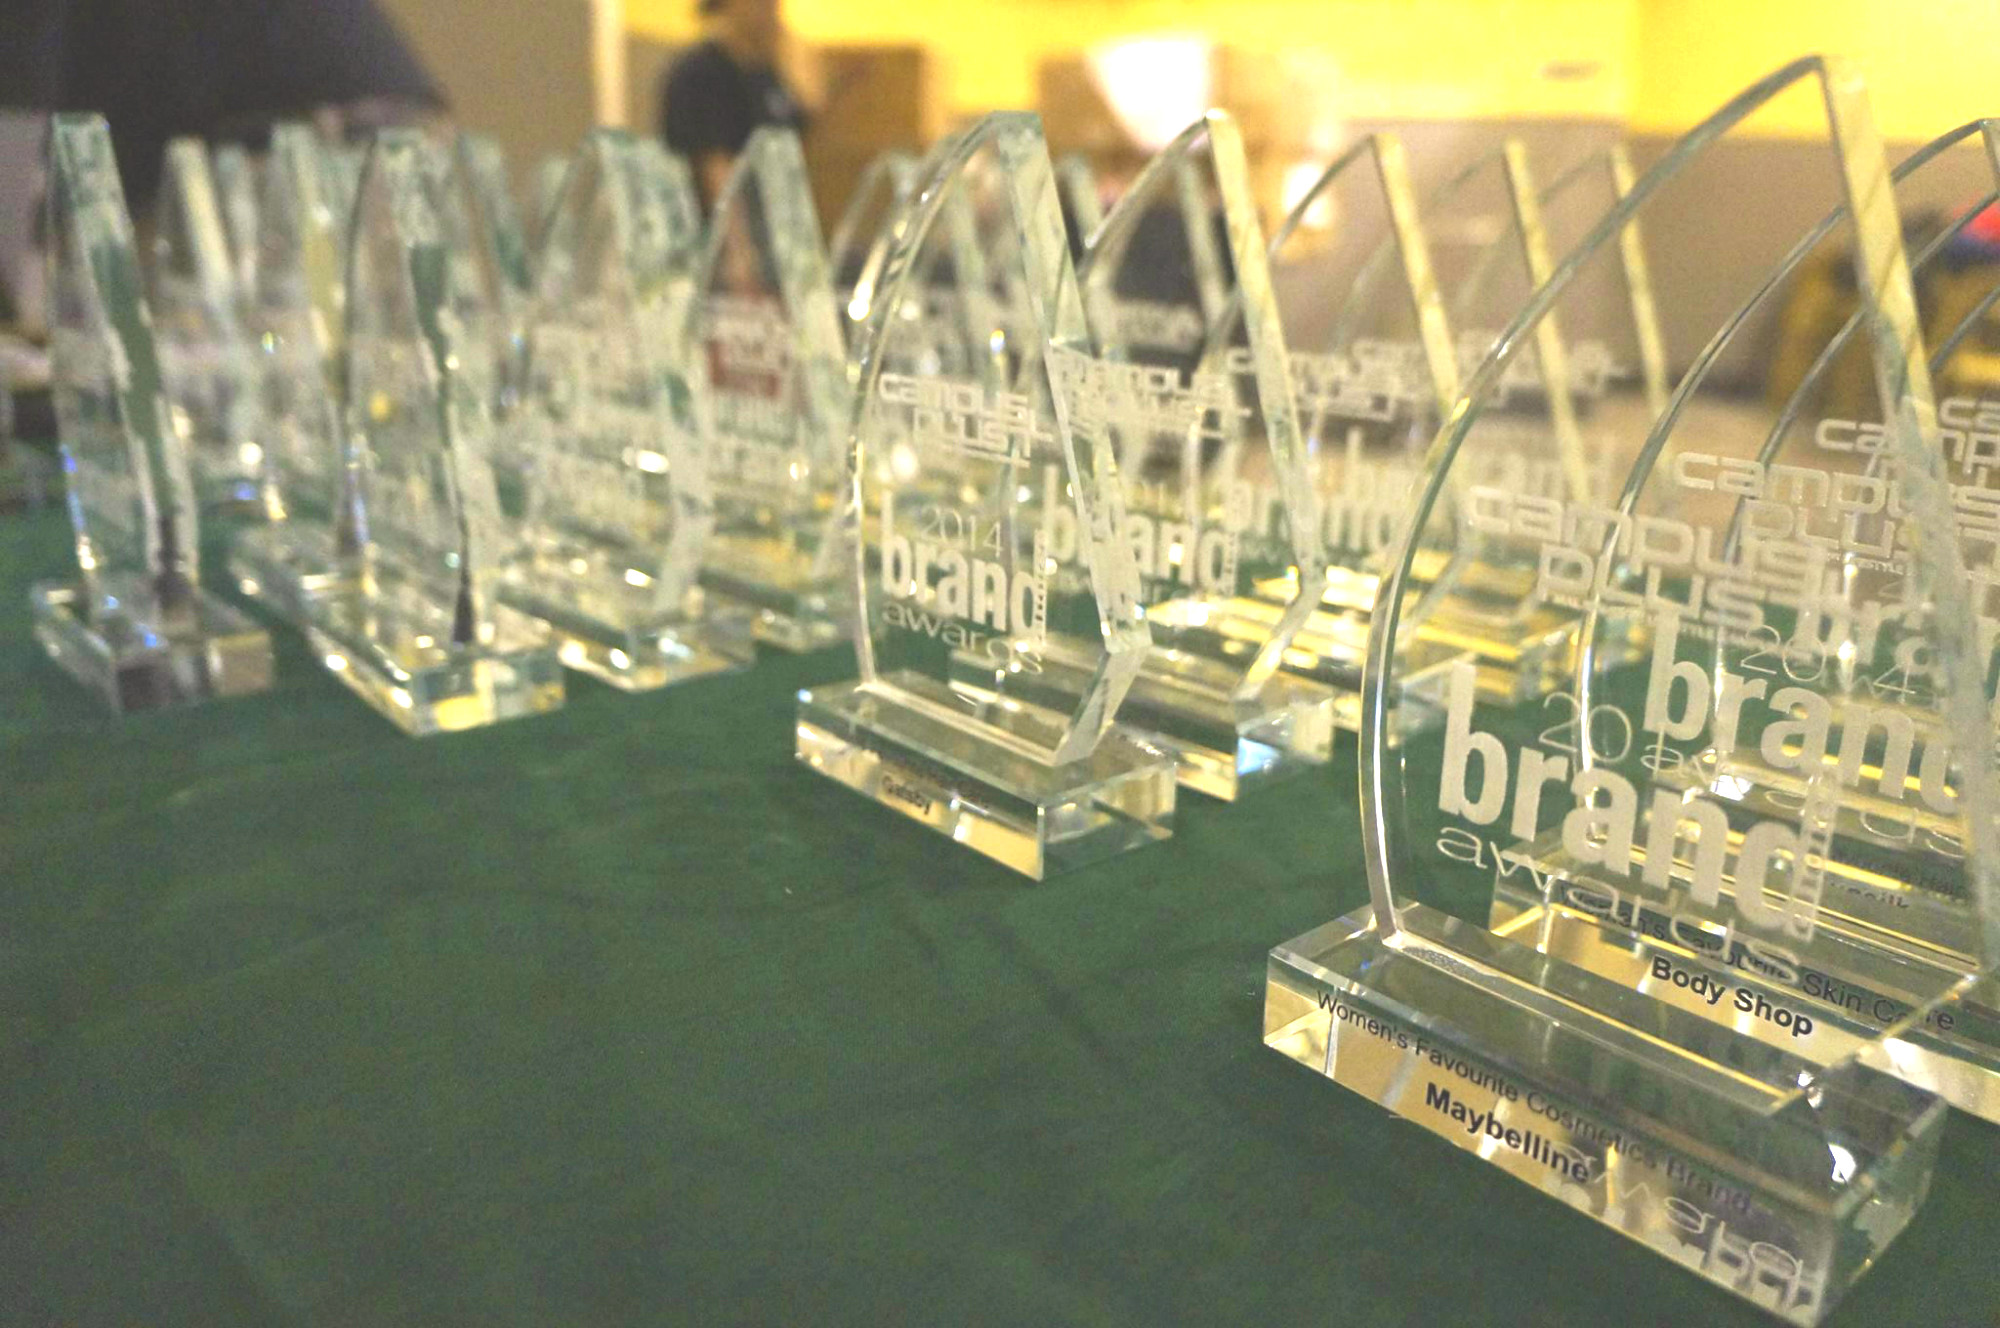 Yoobao and Apacer - Favourite Power Bank Award 2014